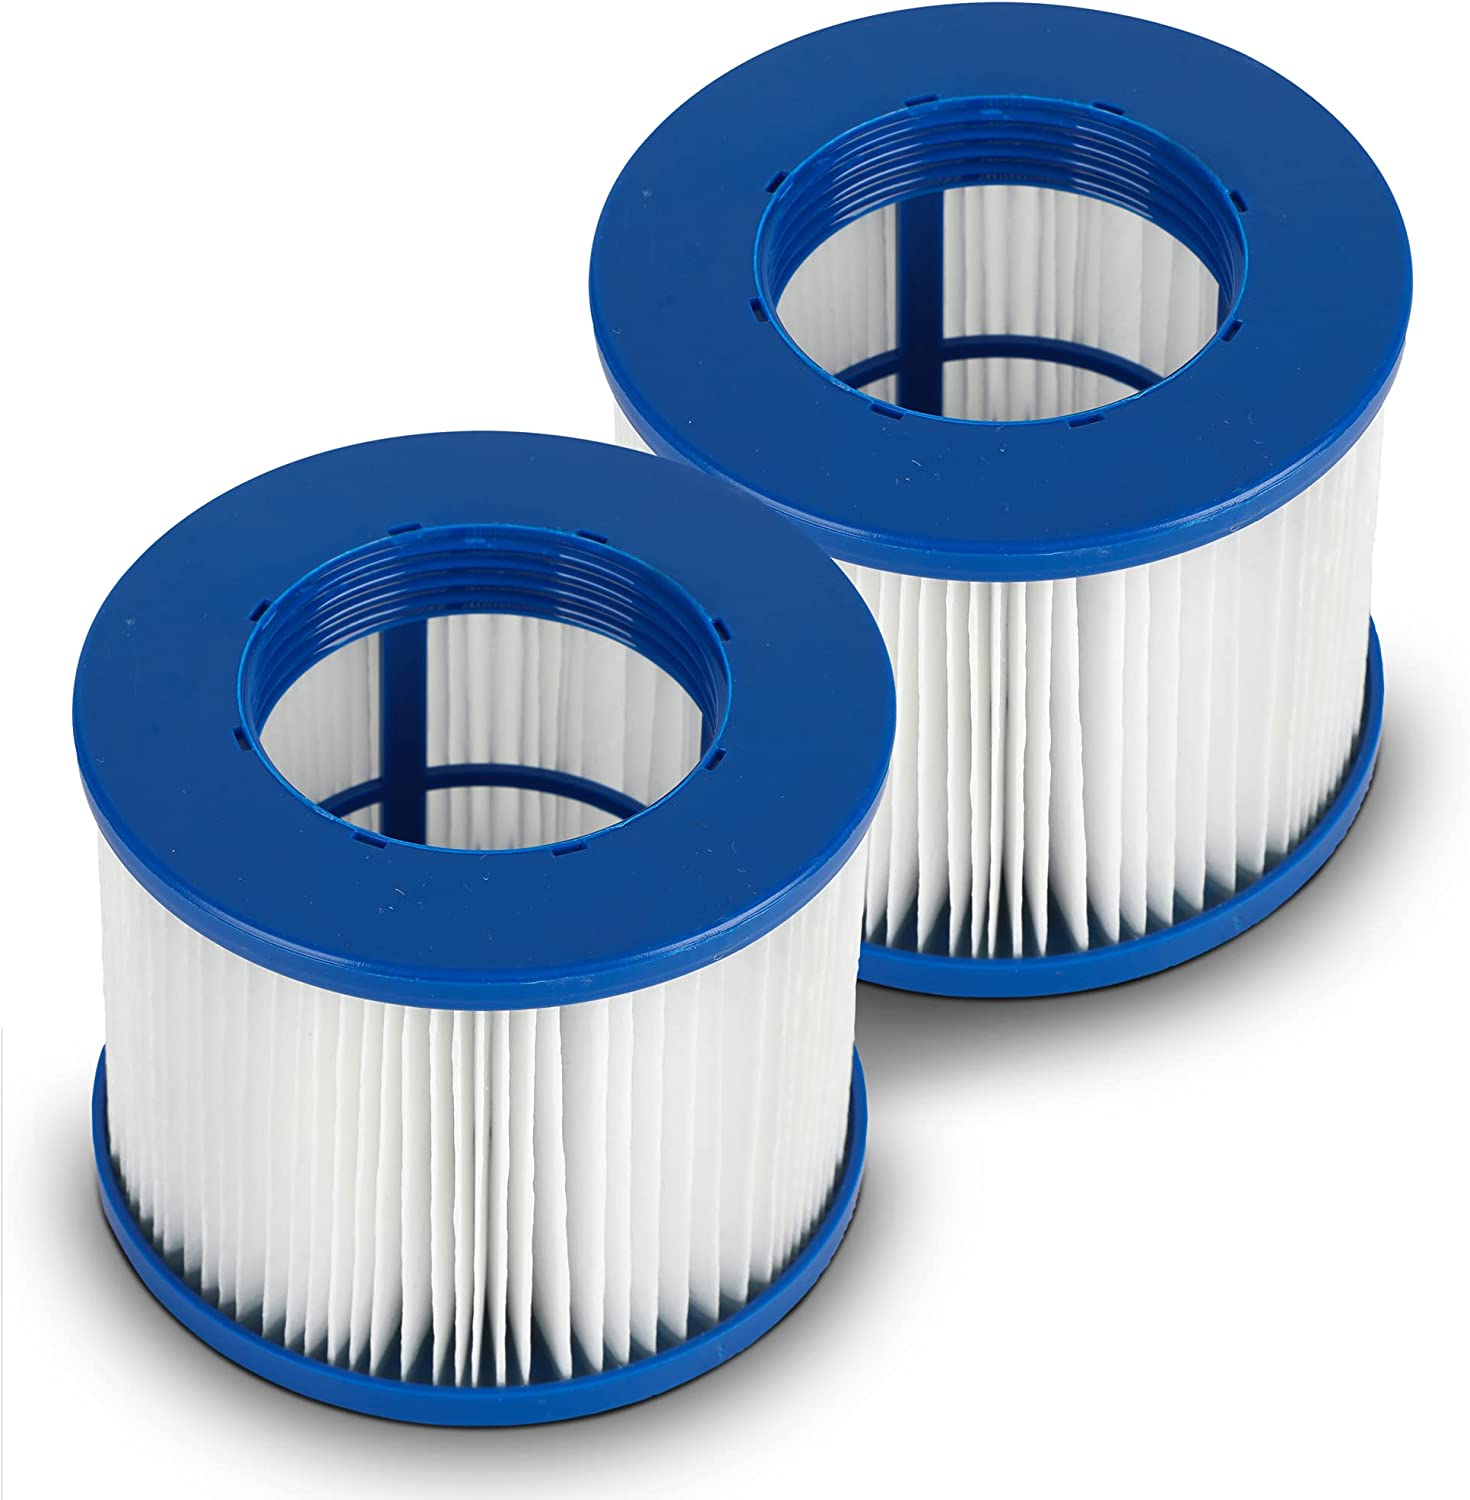 Aqua Spirit 2 Pack Hot Tub Replacement Antibacterial Filter Cartridges for Hot Tub Cleaning and Maintenance - Aqua Spirit iSUPs UK